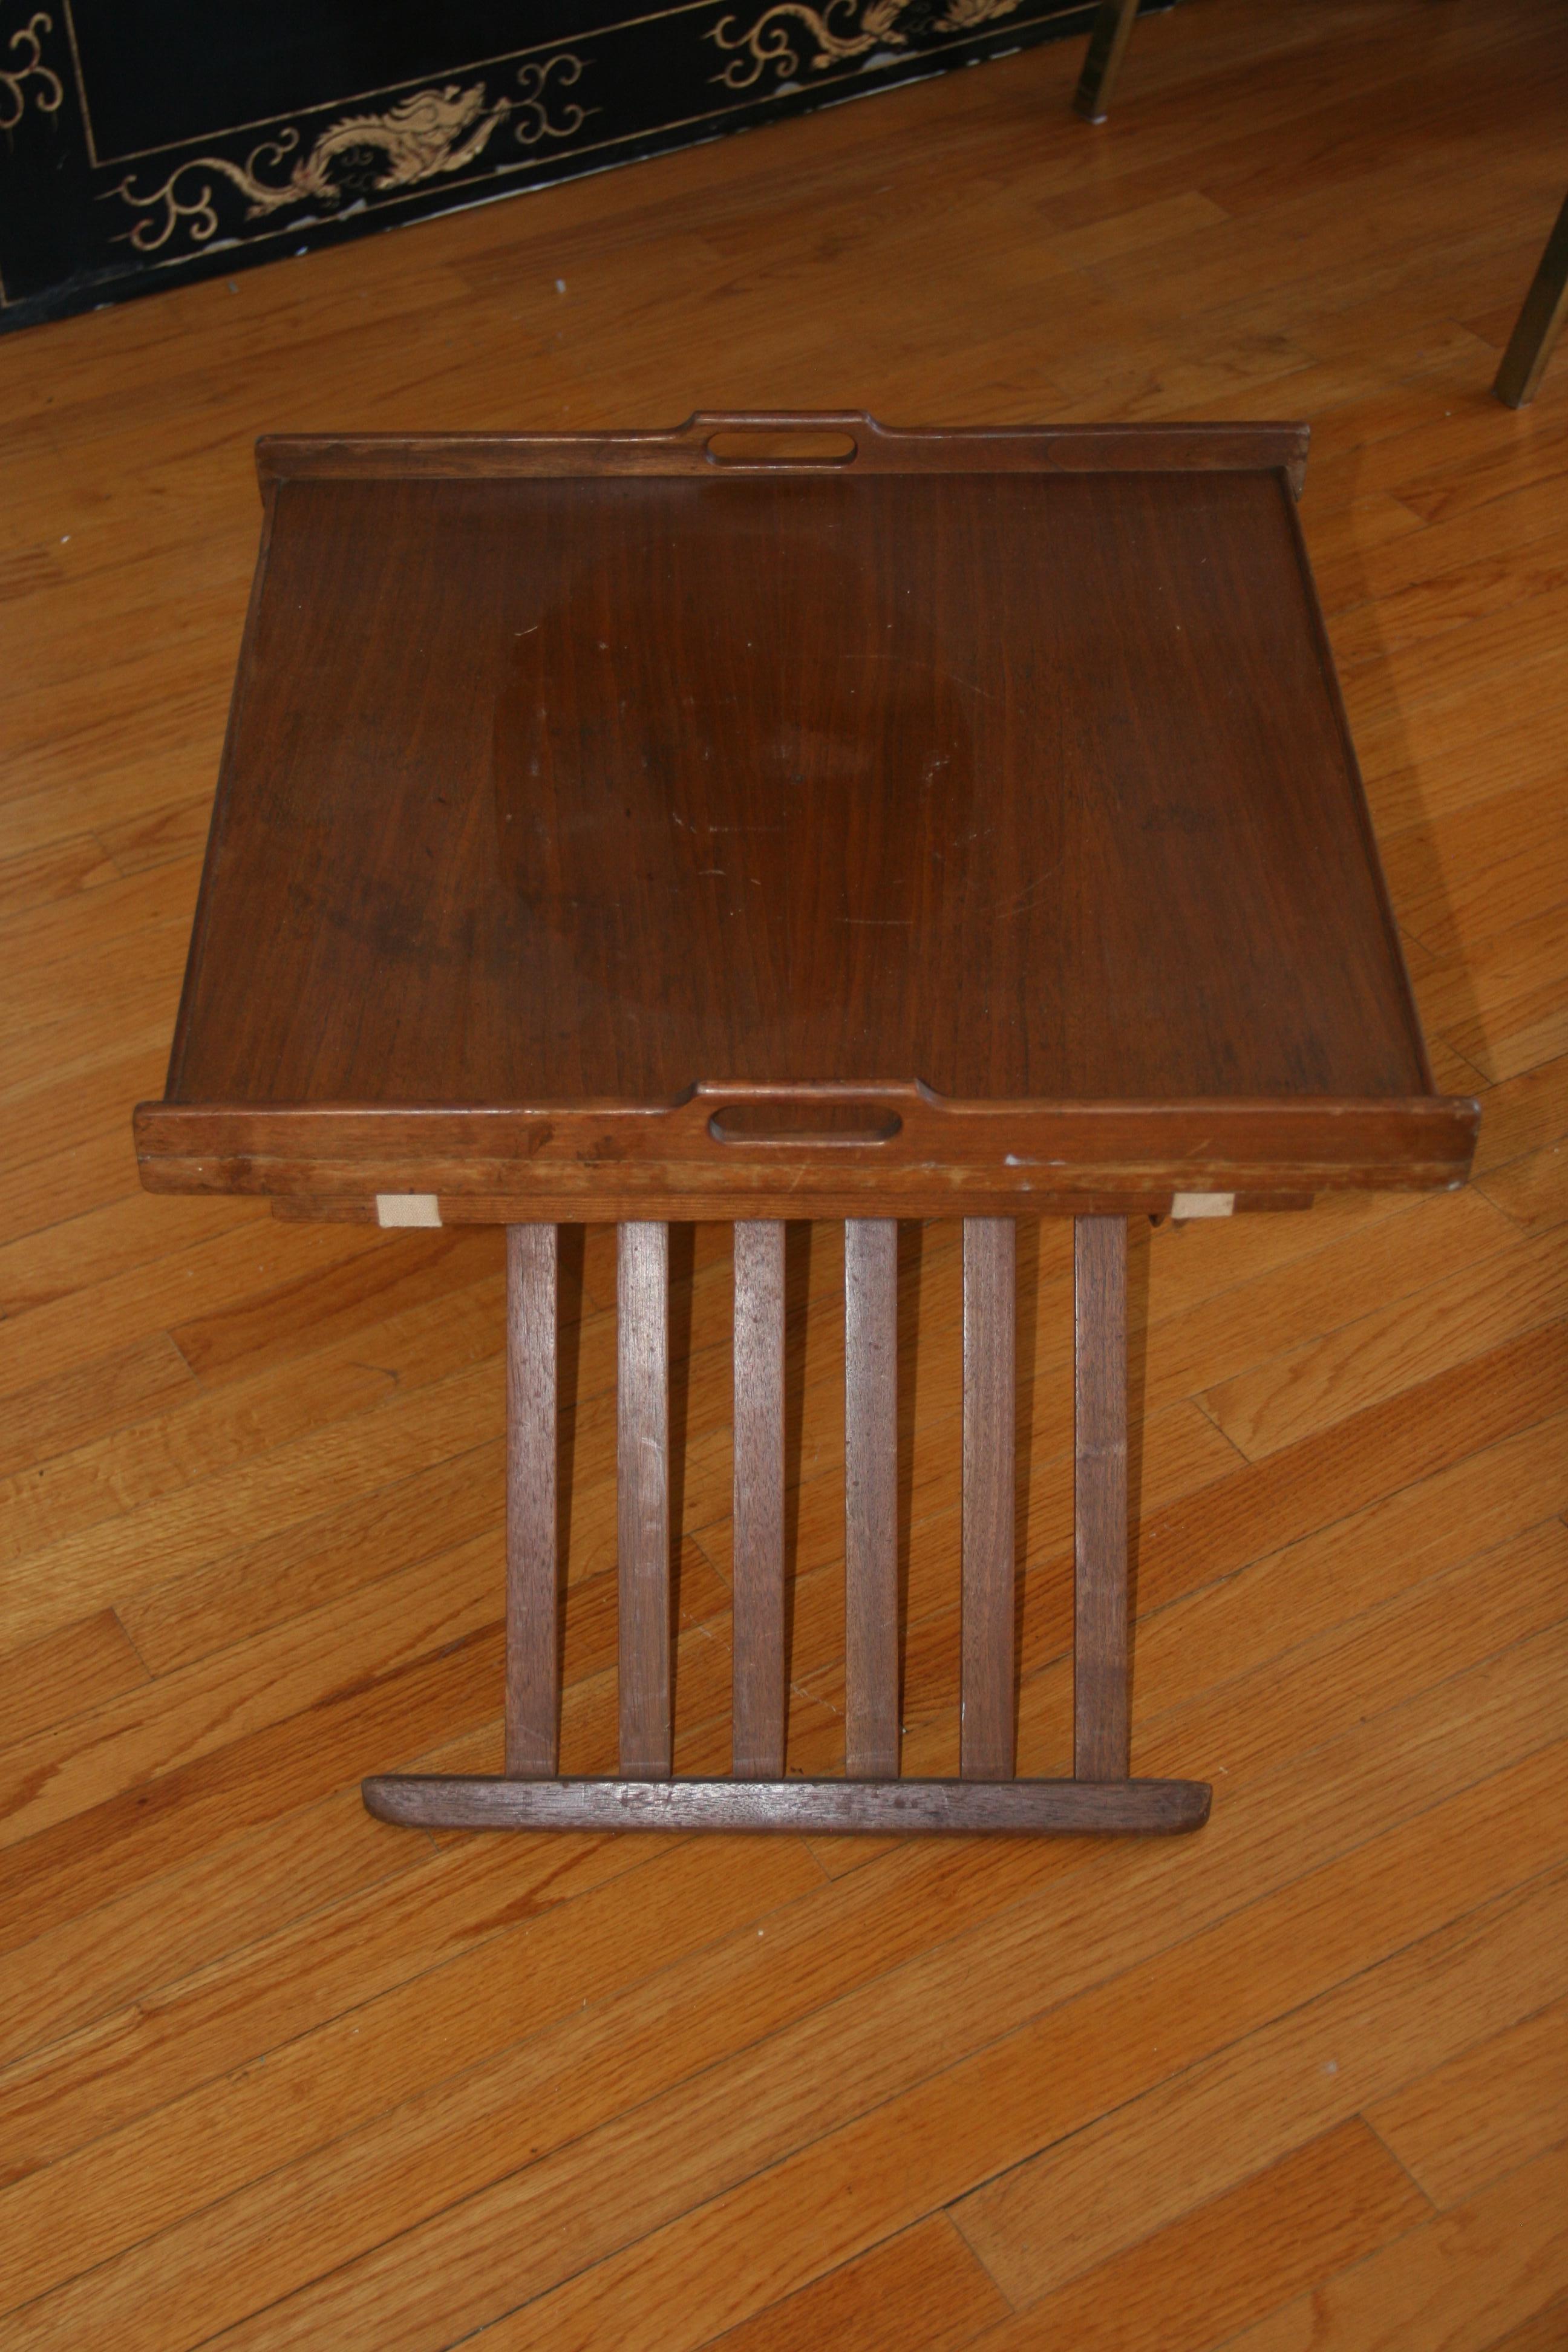 1546 Midcentury walnut folding tray table by Drexel 1960